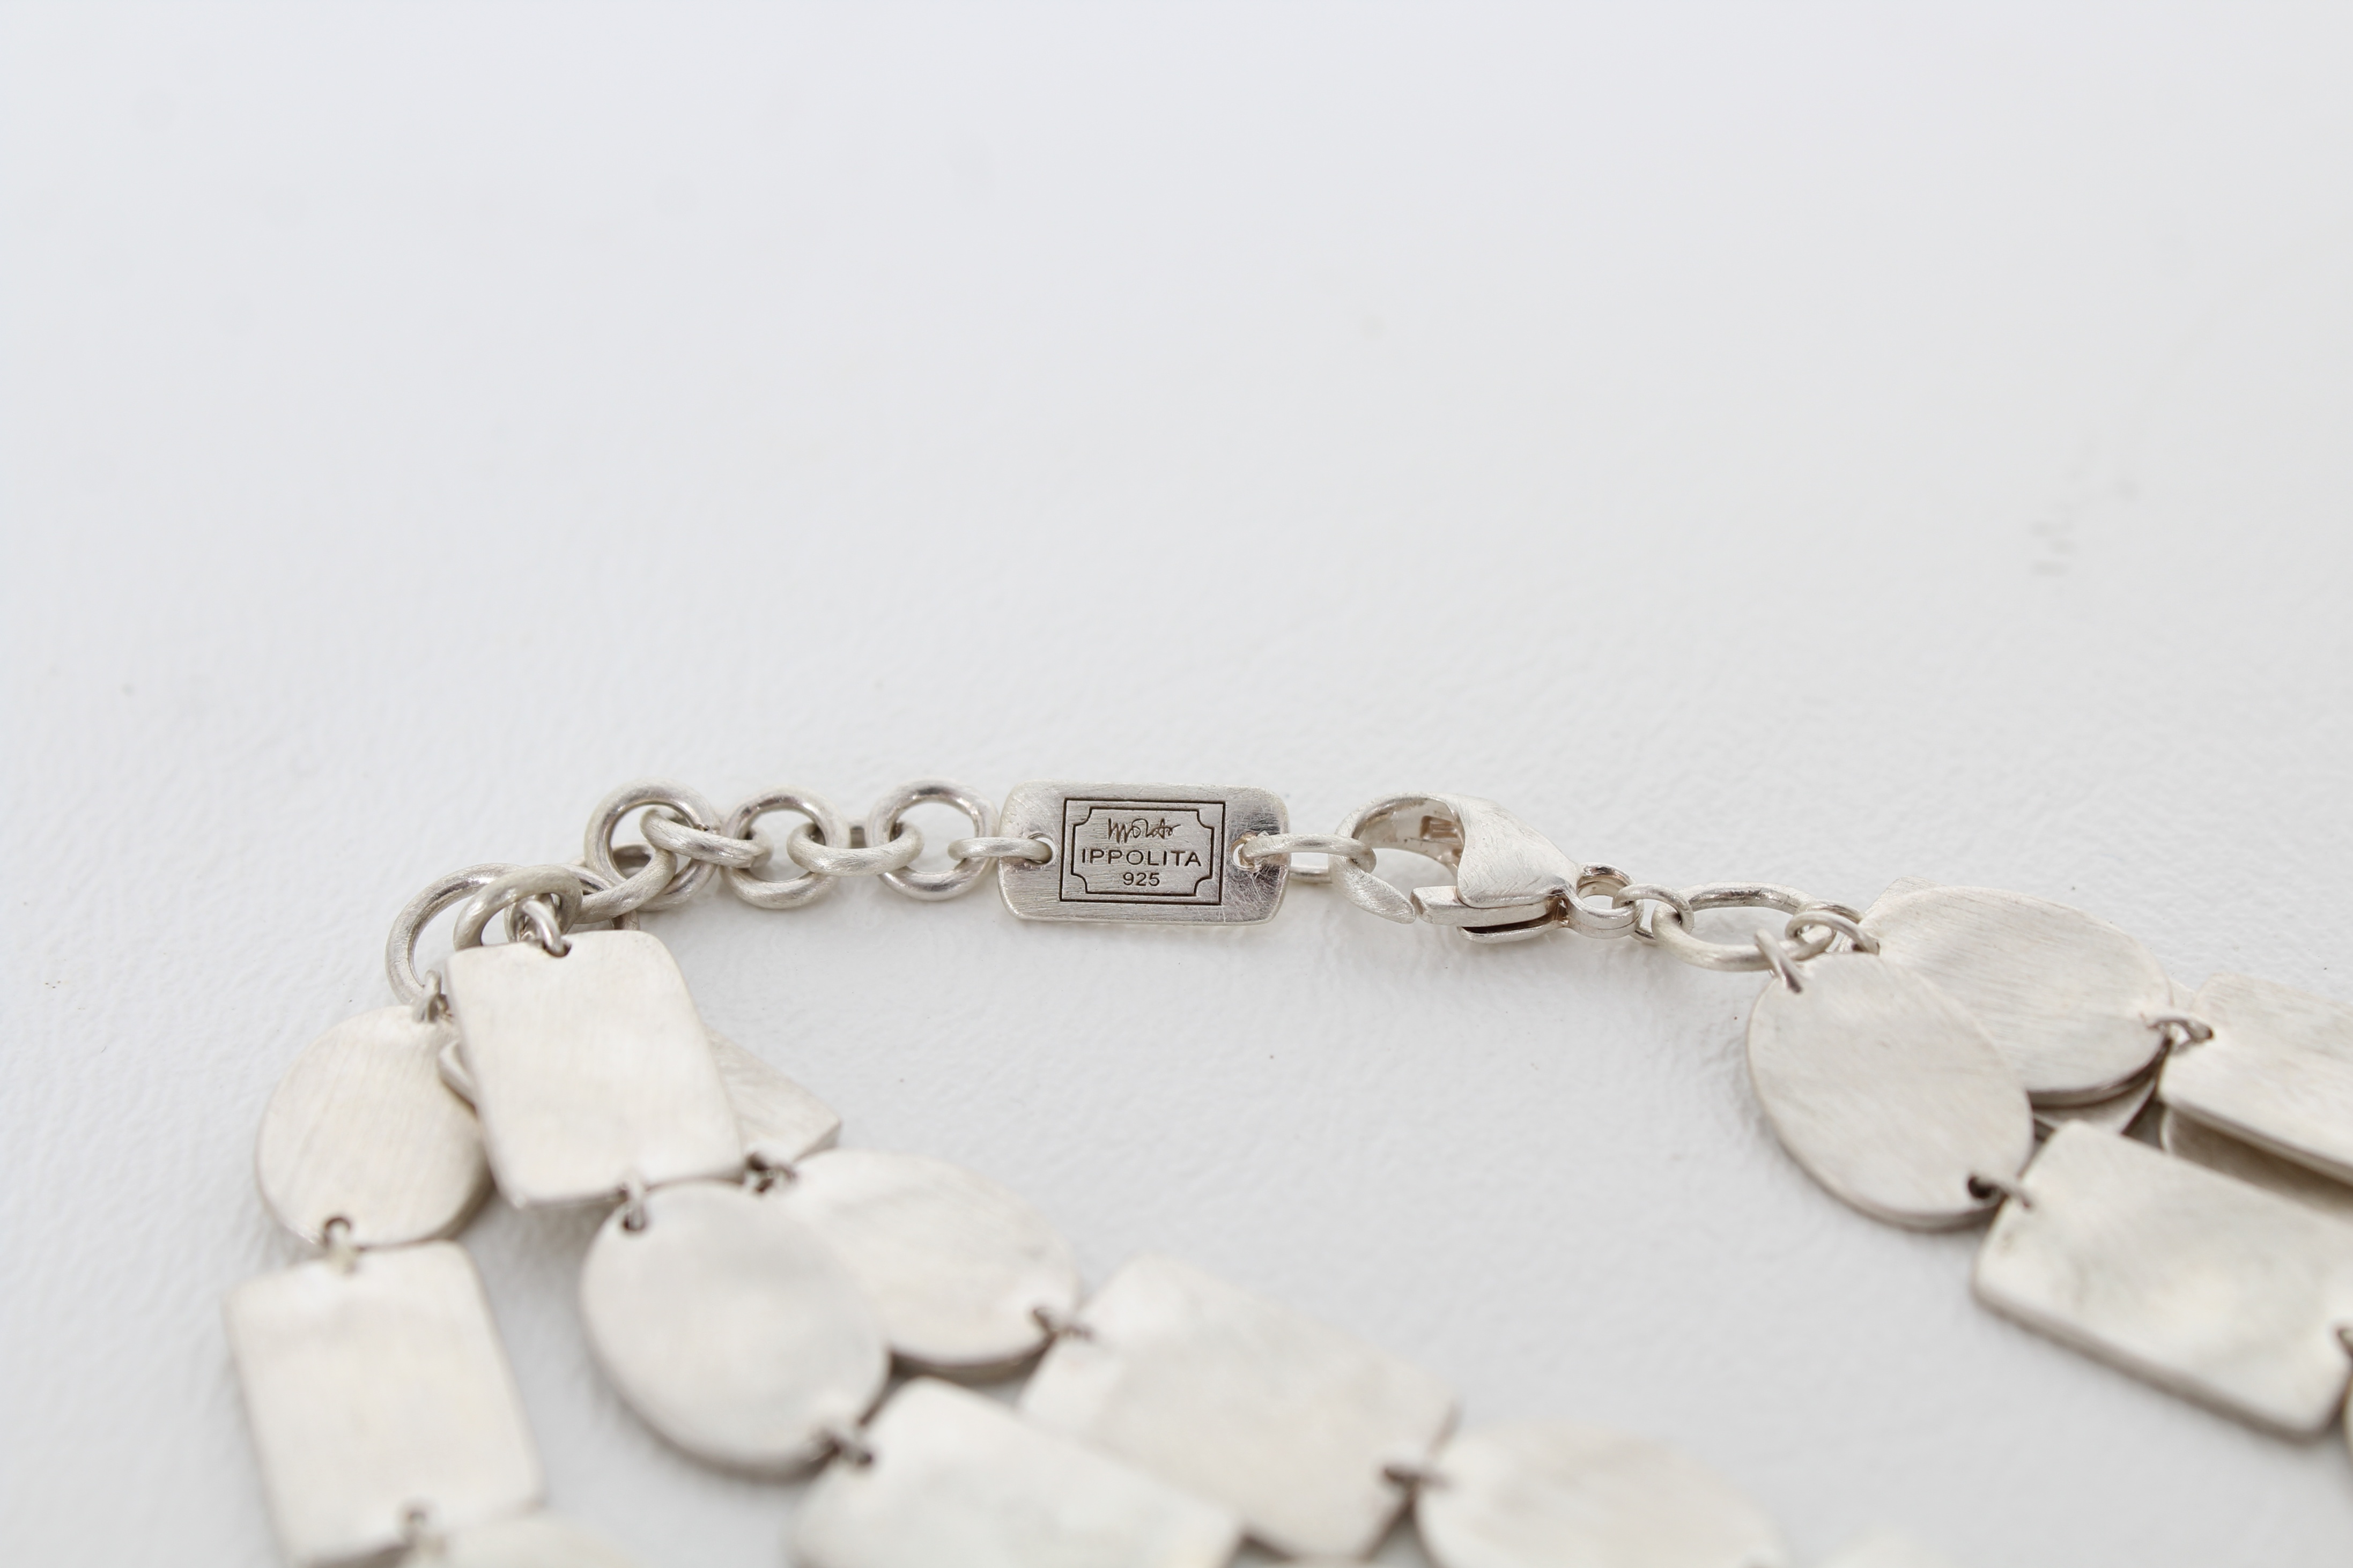 Ippolita Sterling Silver Link Necklace - Image 4 of 4